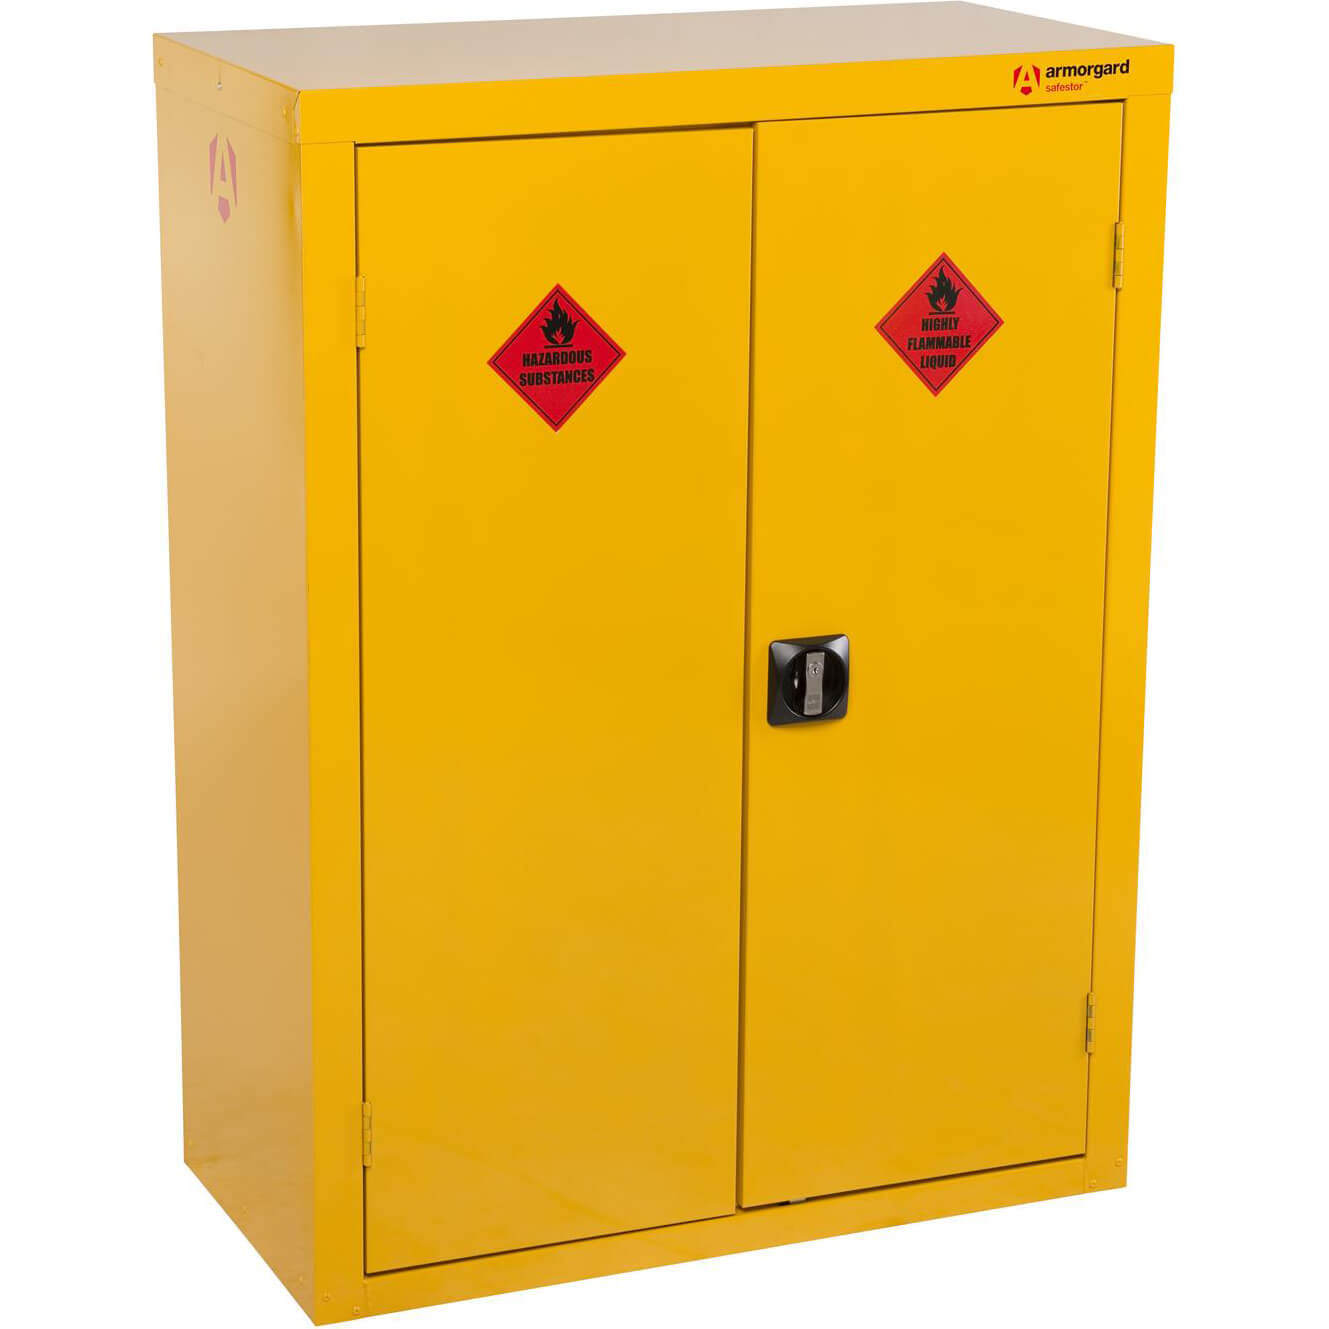 Image of Armorgard Safestor Hazardous Materials Secure Storage Cabinet 900mm 465mm 1200mm